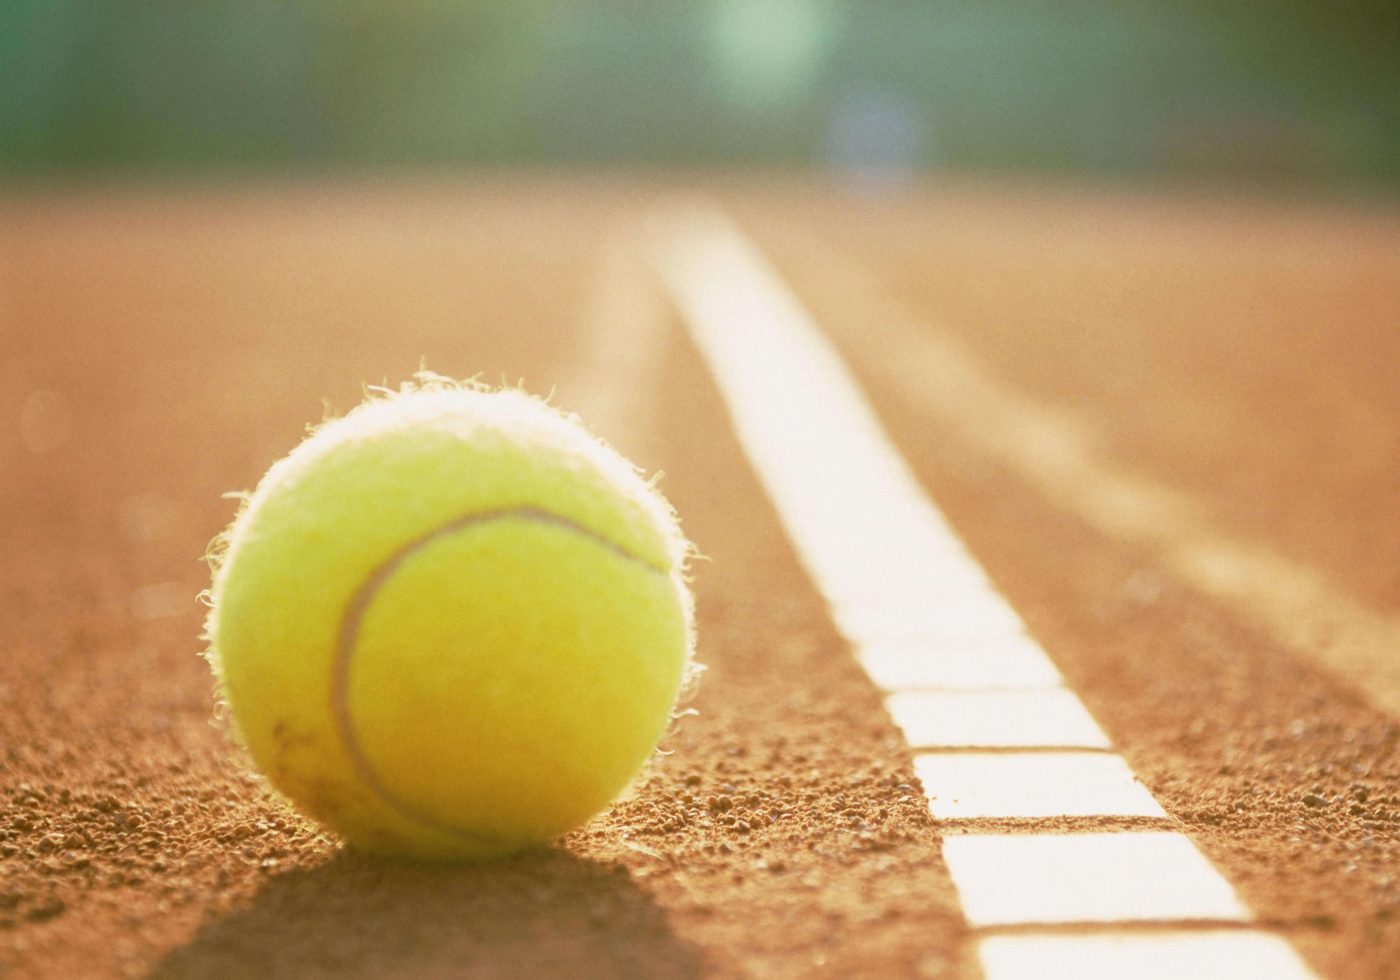 internazionali tennis roma 2021 pallina campo terra battuta